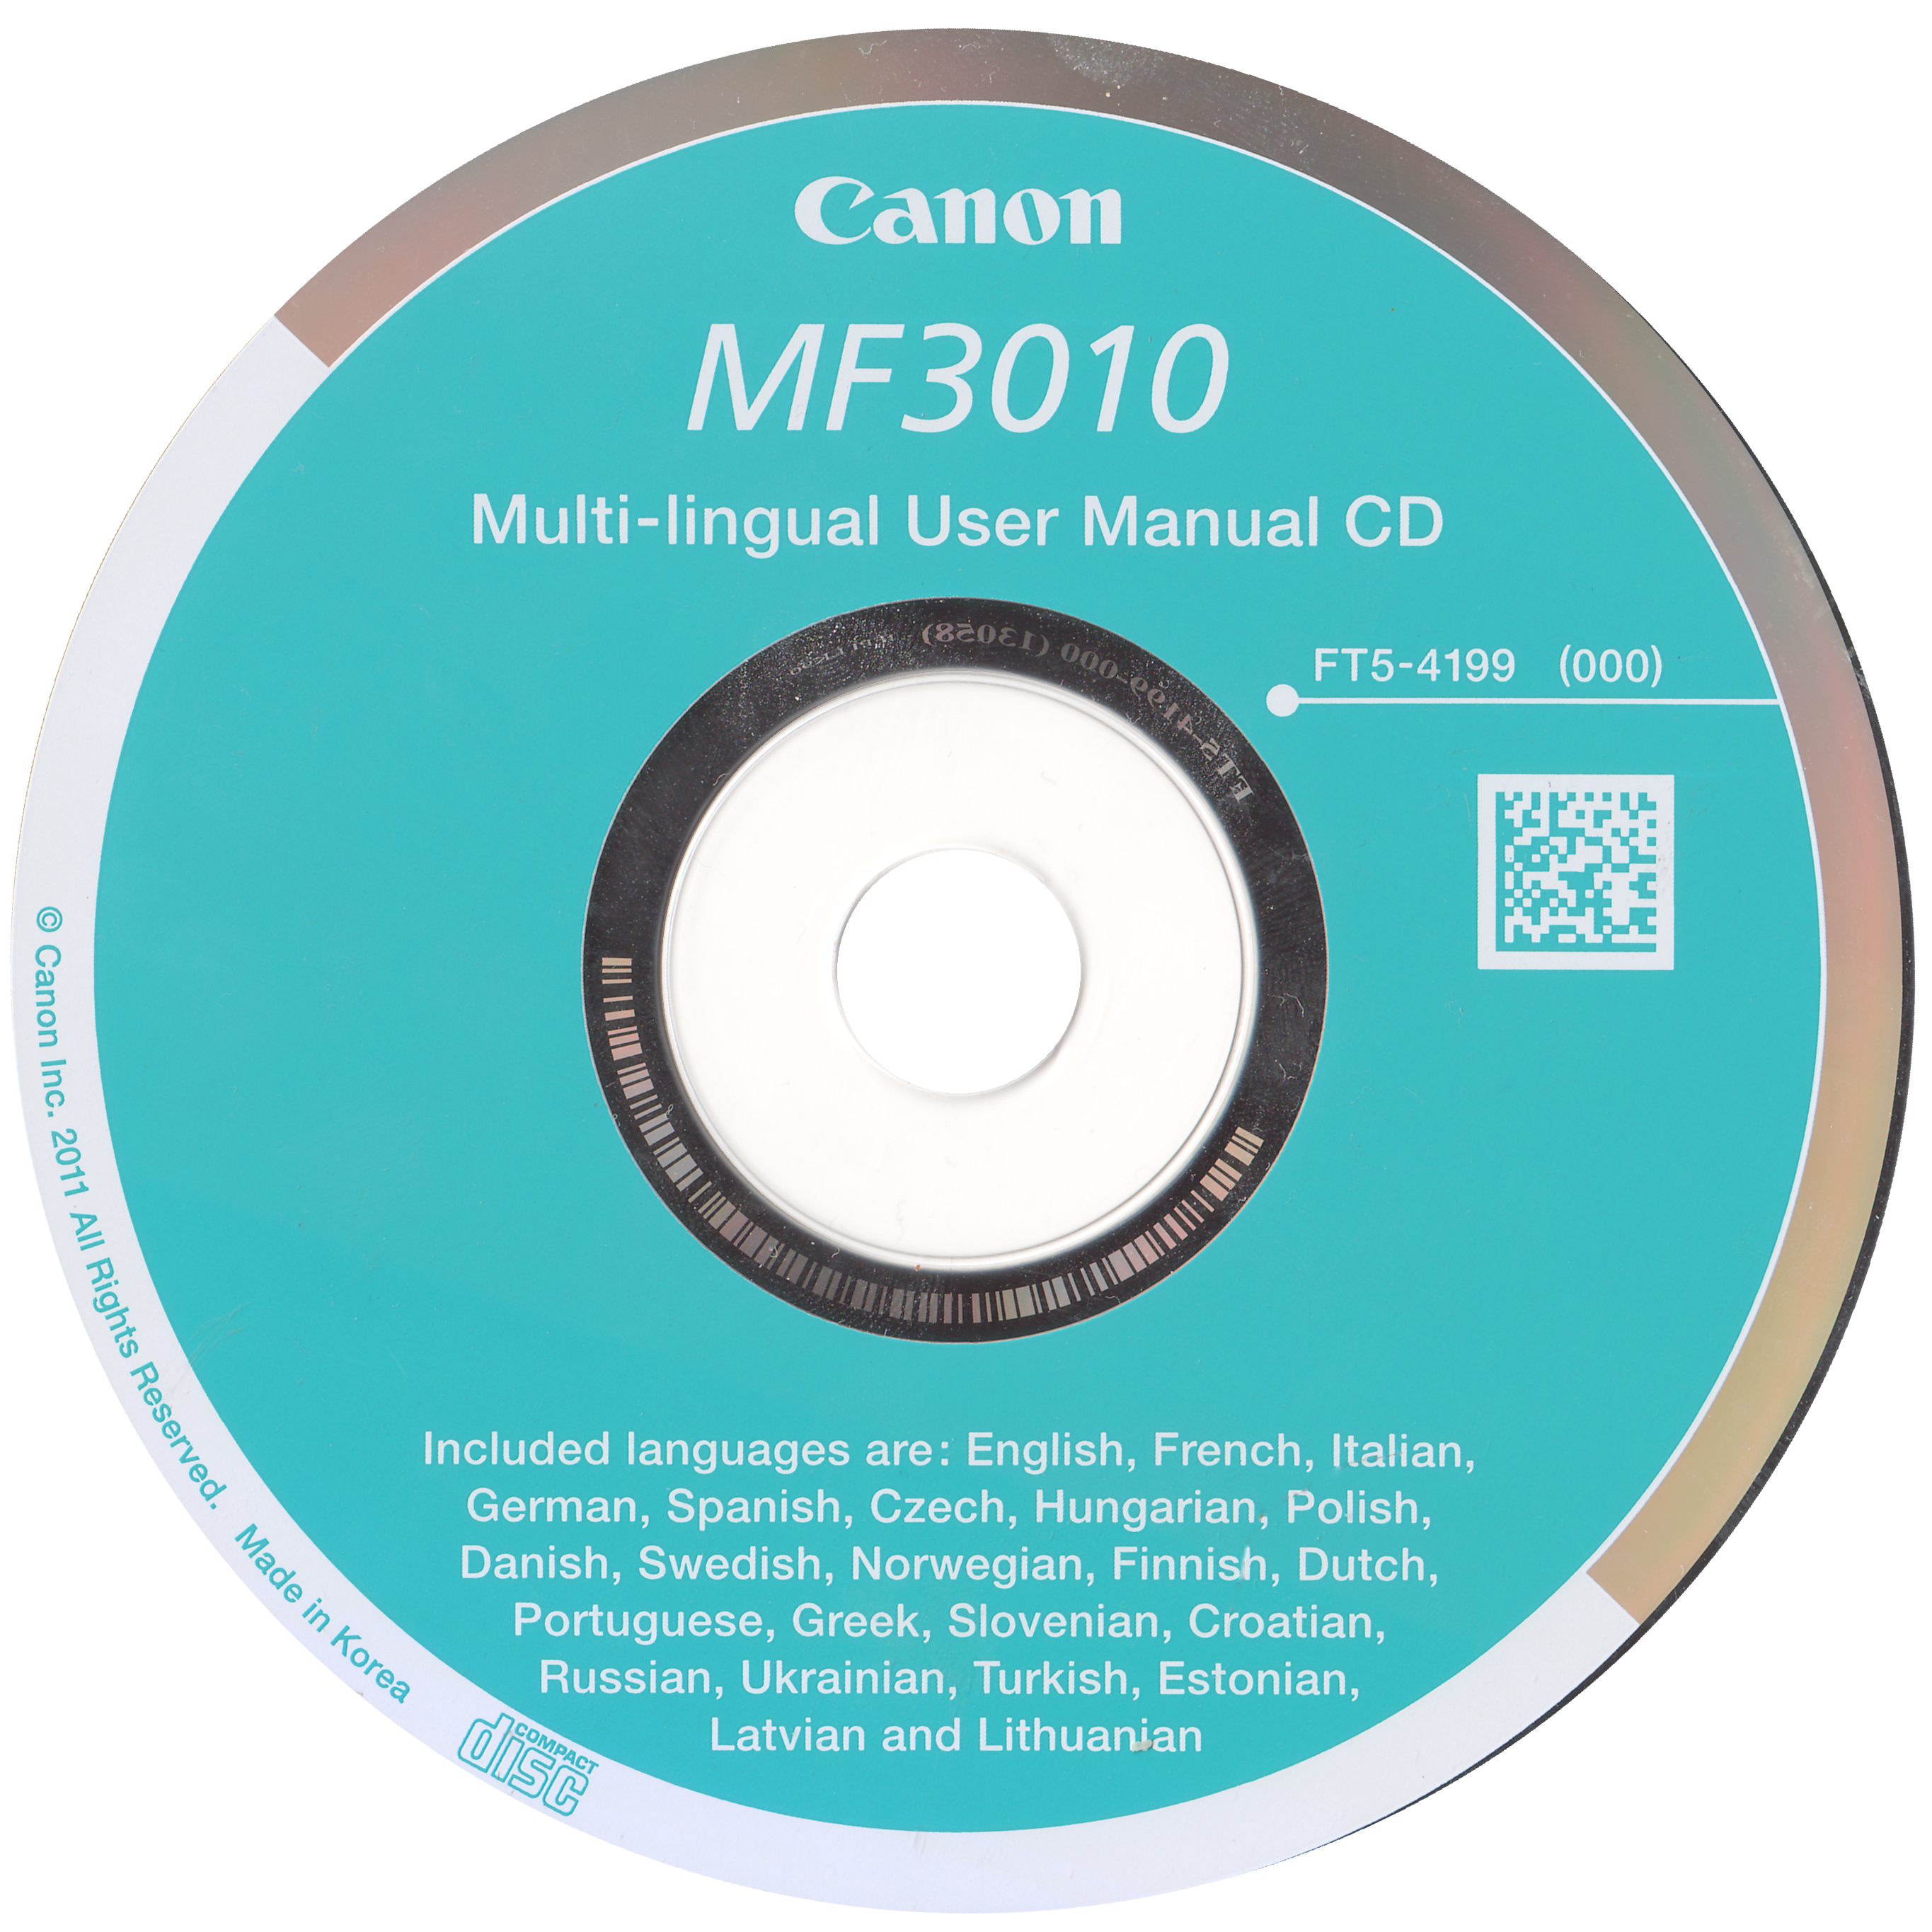 Mf3010 download canon driver CanoScan MF3010